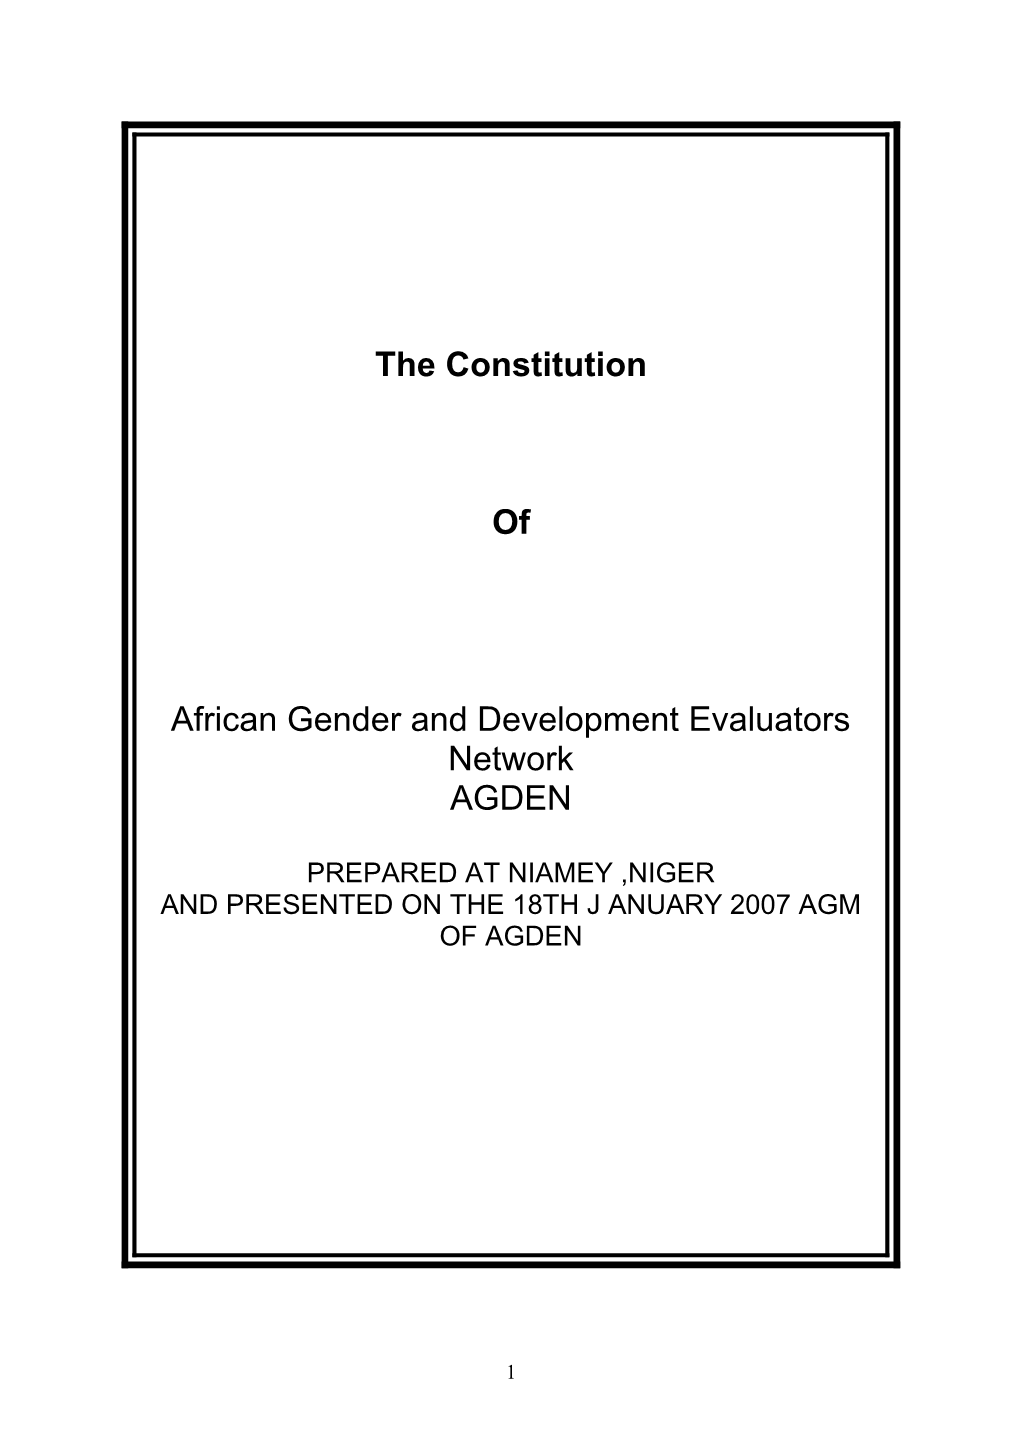 African Gender and Development Evaluators Network